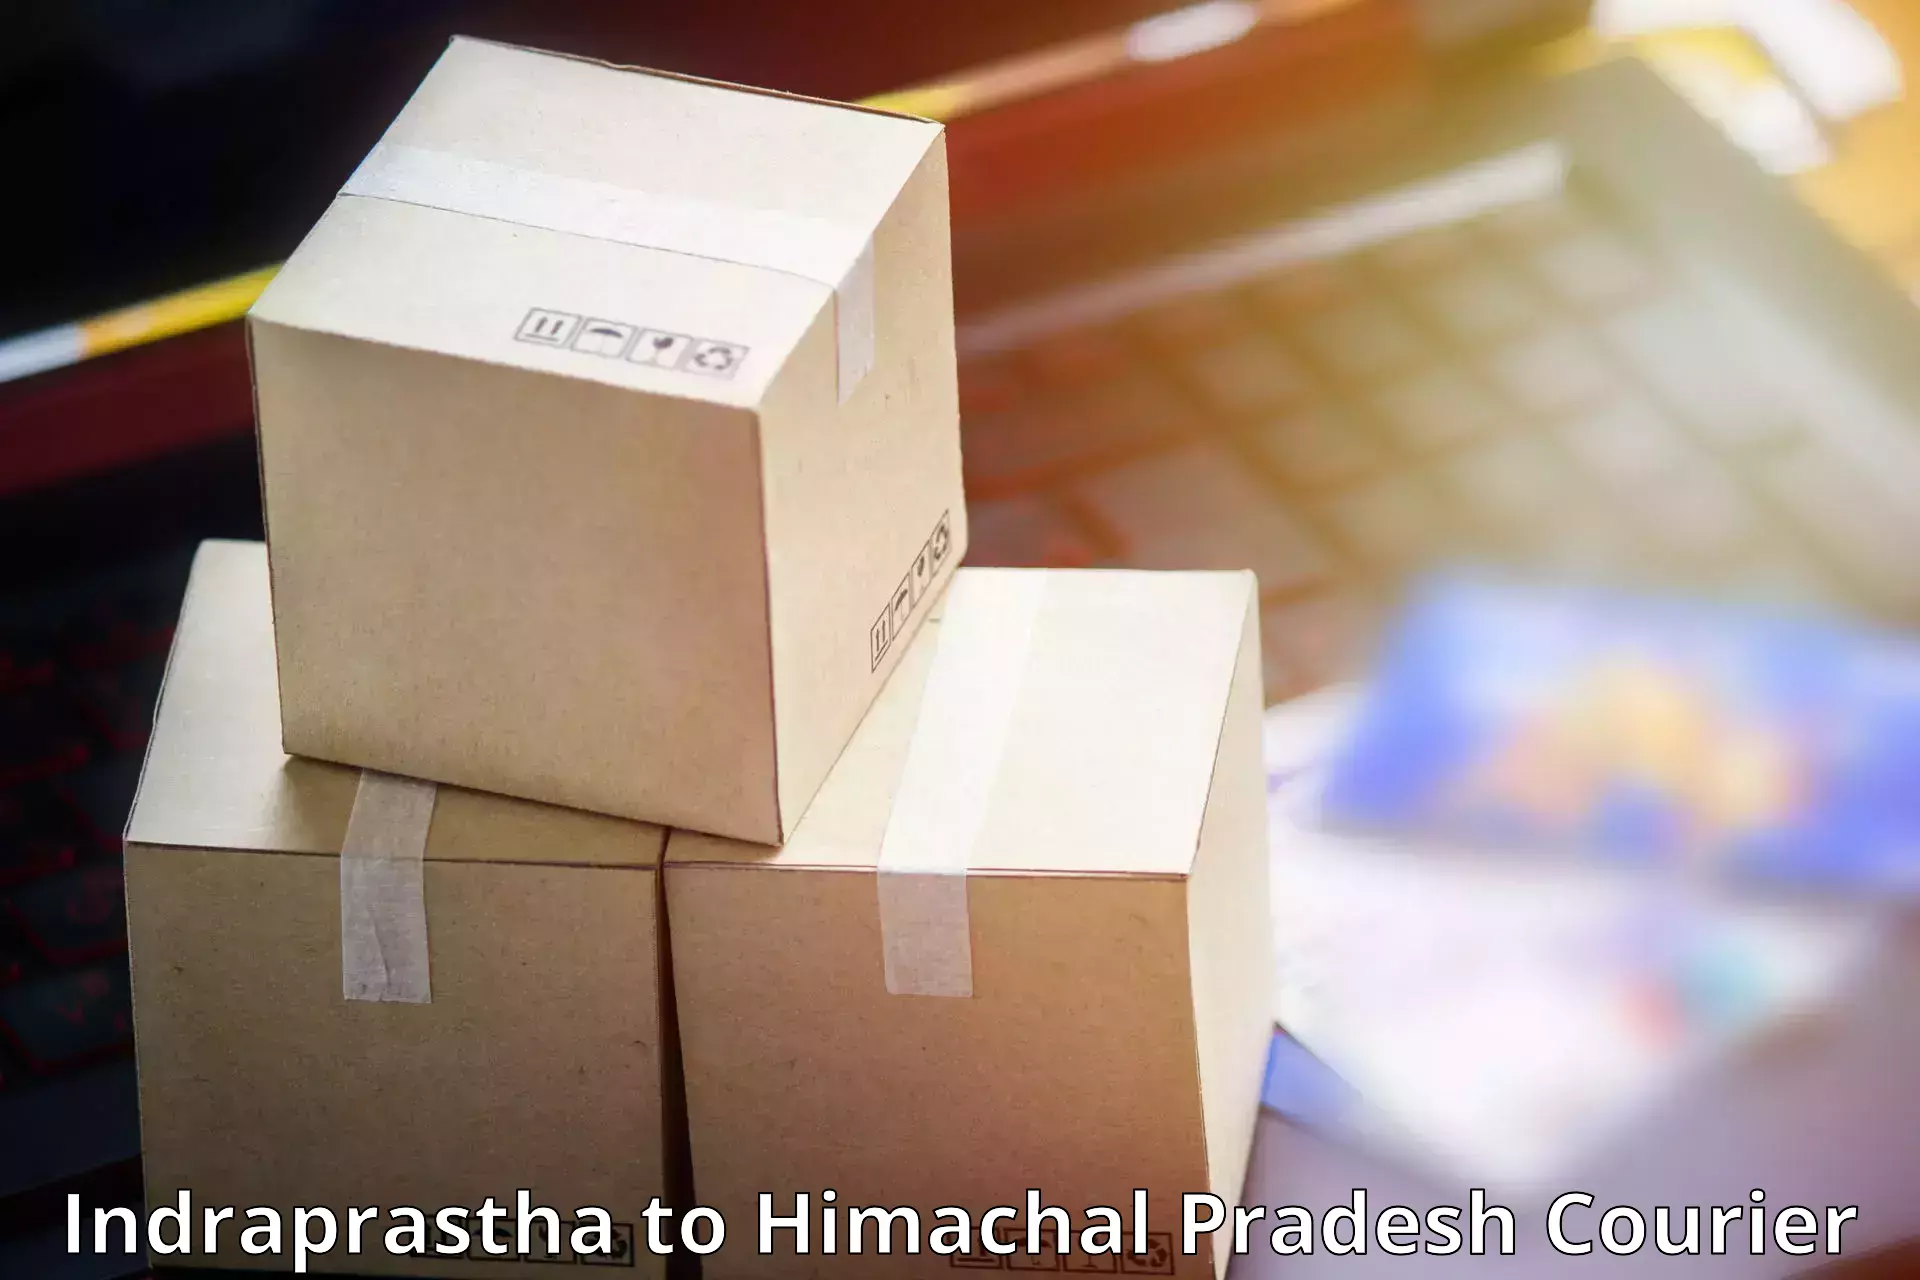 Courier app Indraprastha to Himachal Pradesh